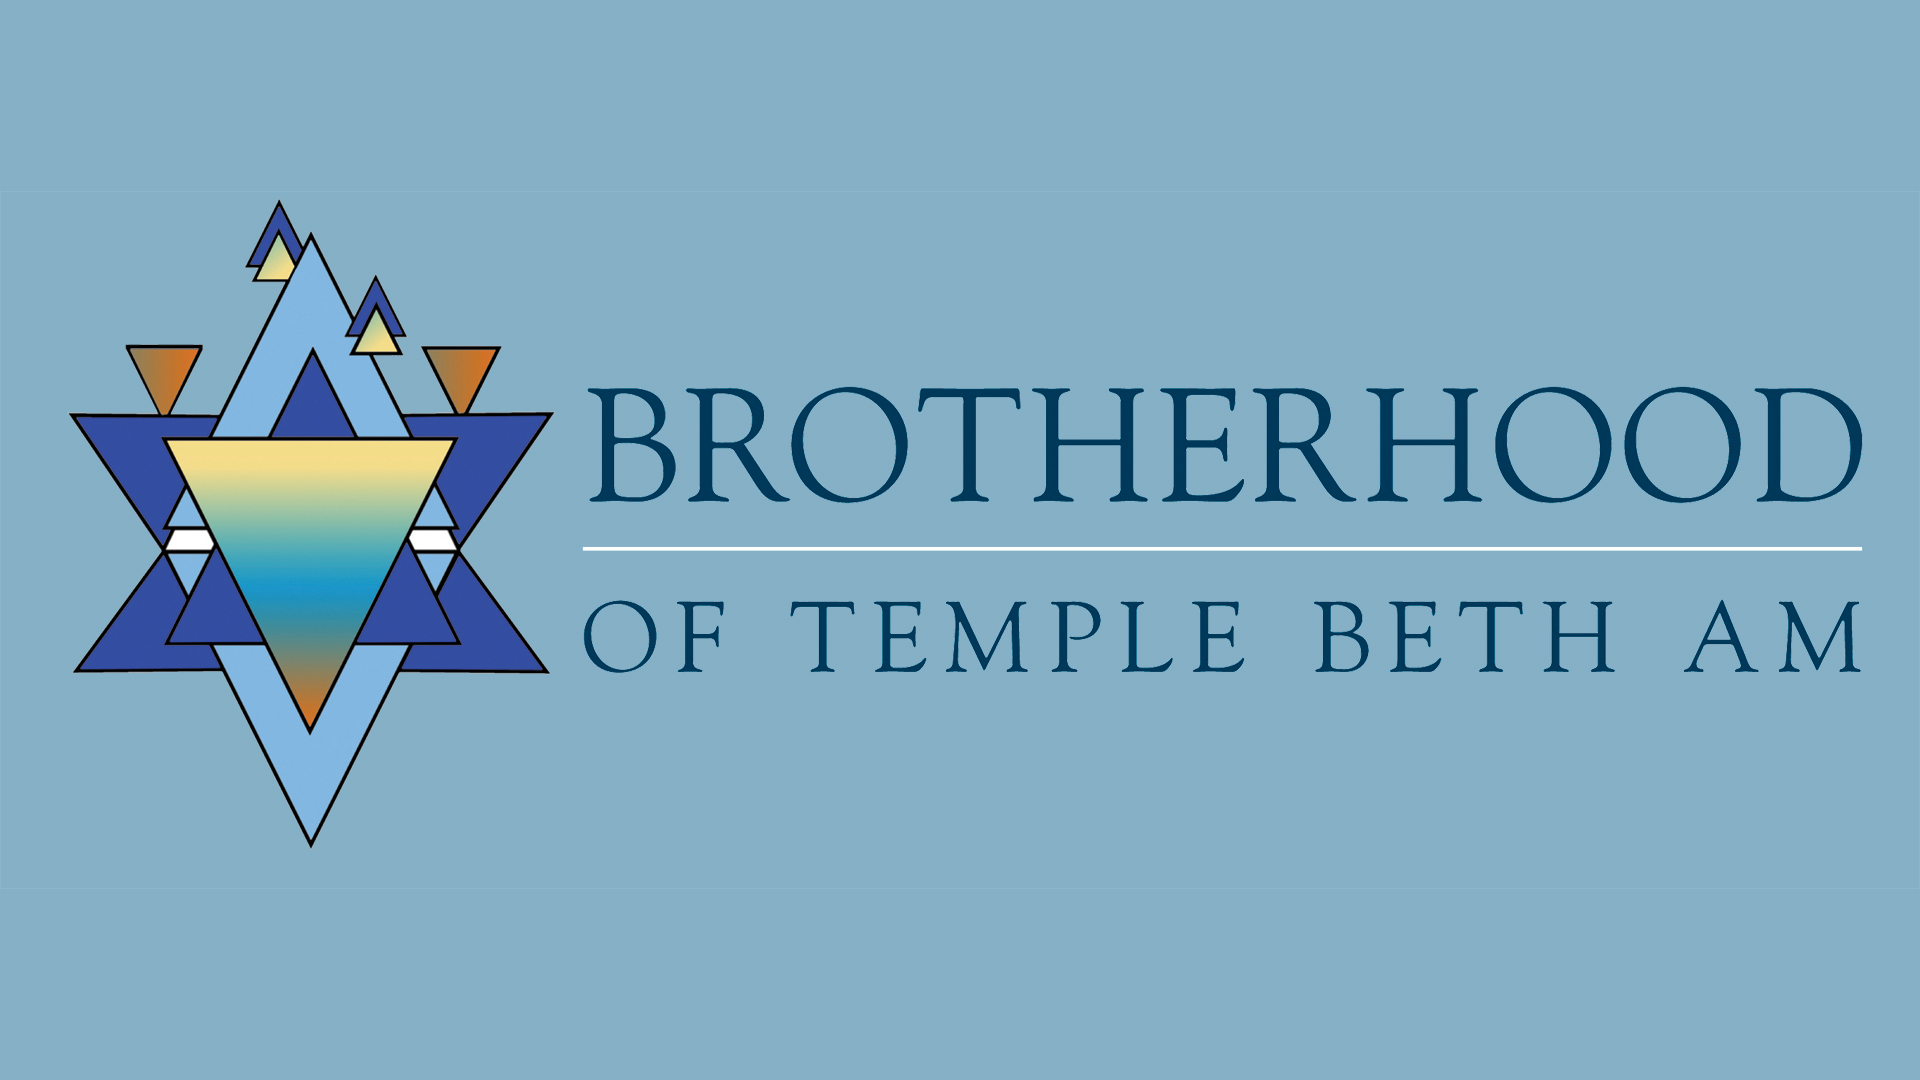 Brotherhood of Temple Beth Am